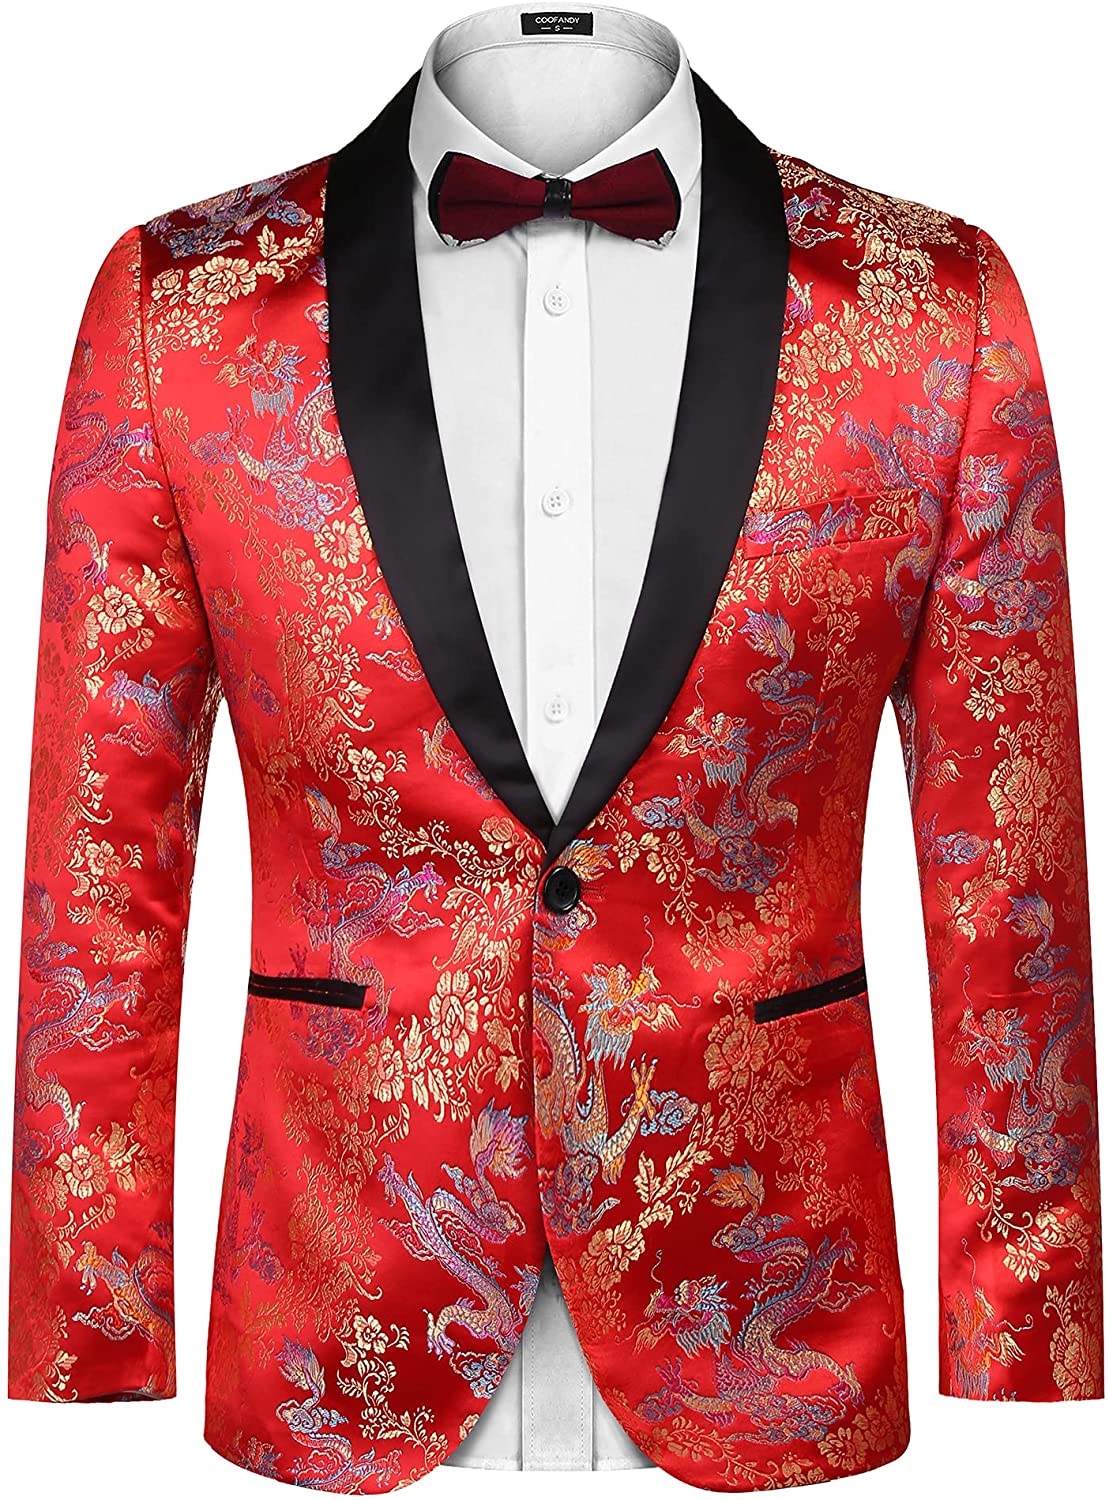 COOFANDY Mens Floral Suit Jackat Luxury Stylish Slim Fit Dinner Blazer One Button Sport Coat 